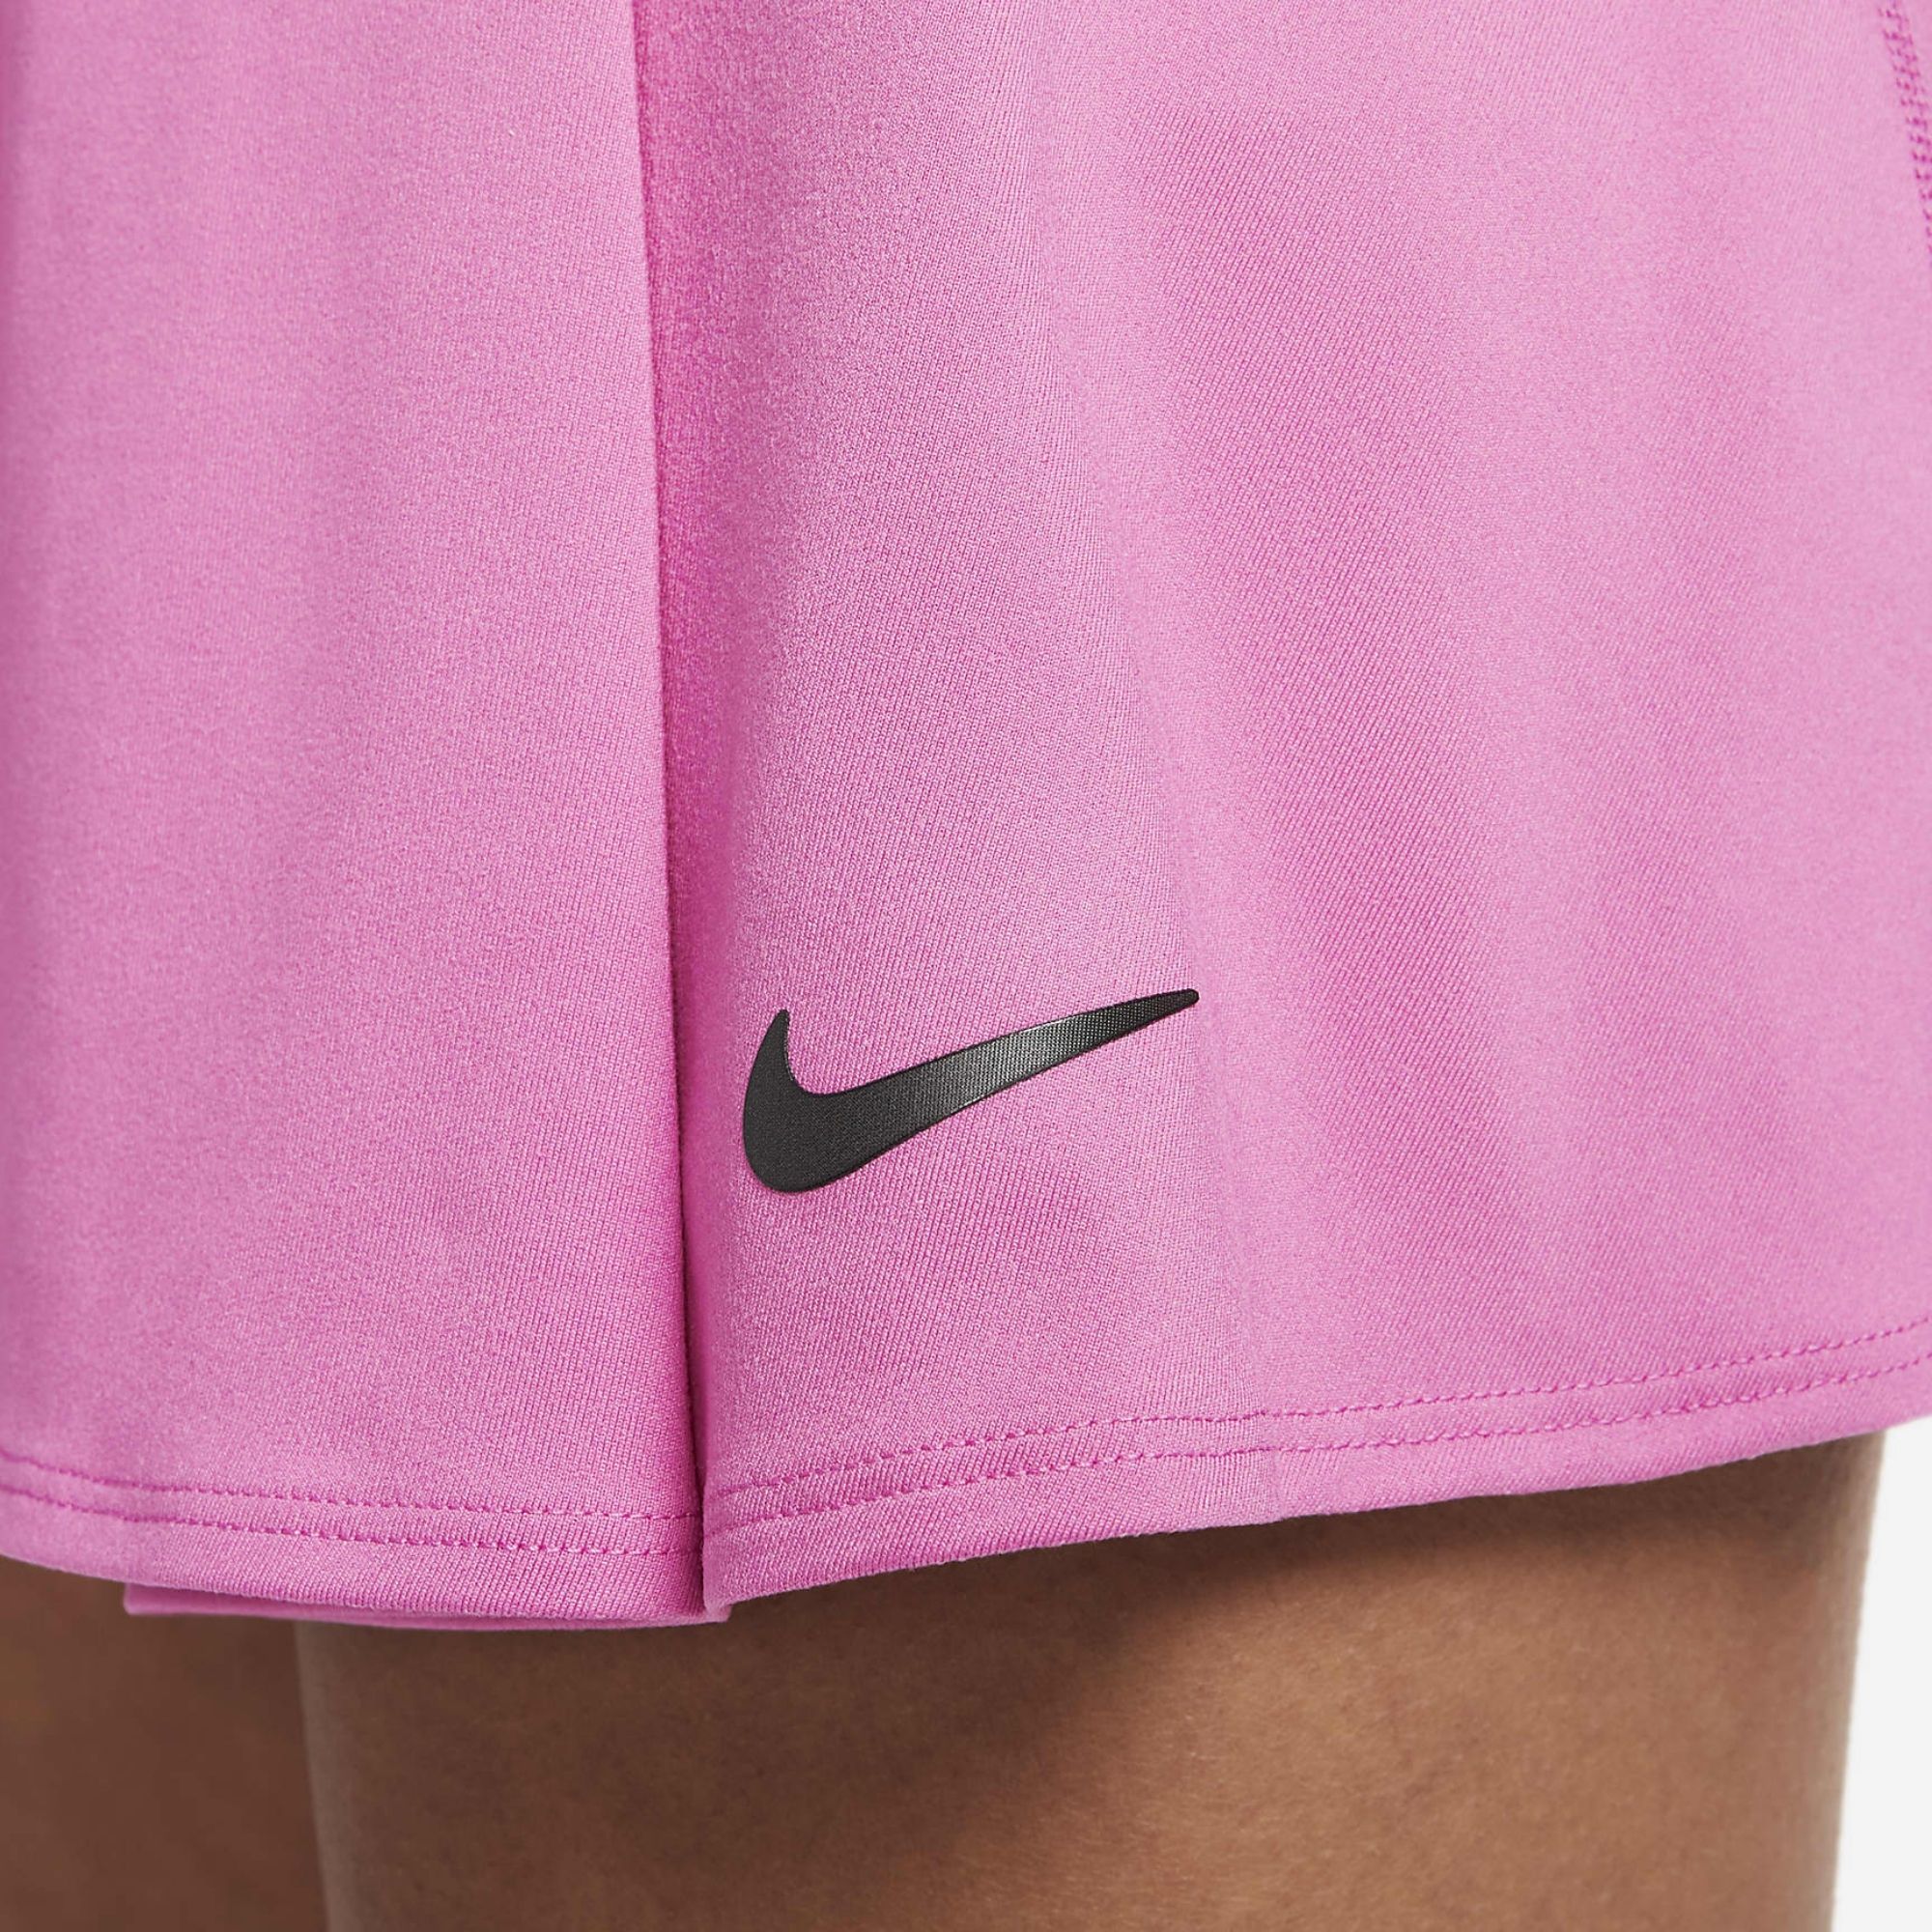 Saia Shorts Nike Court Dri Fit Victory Feminina